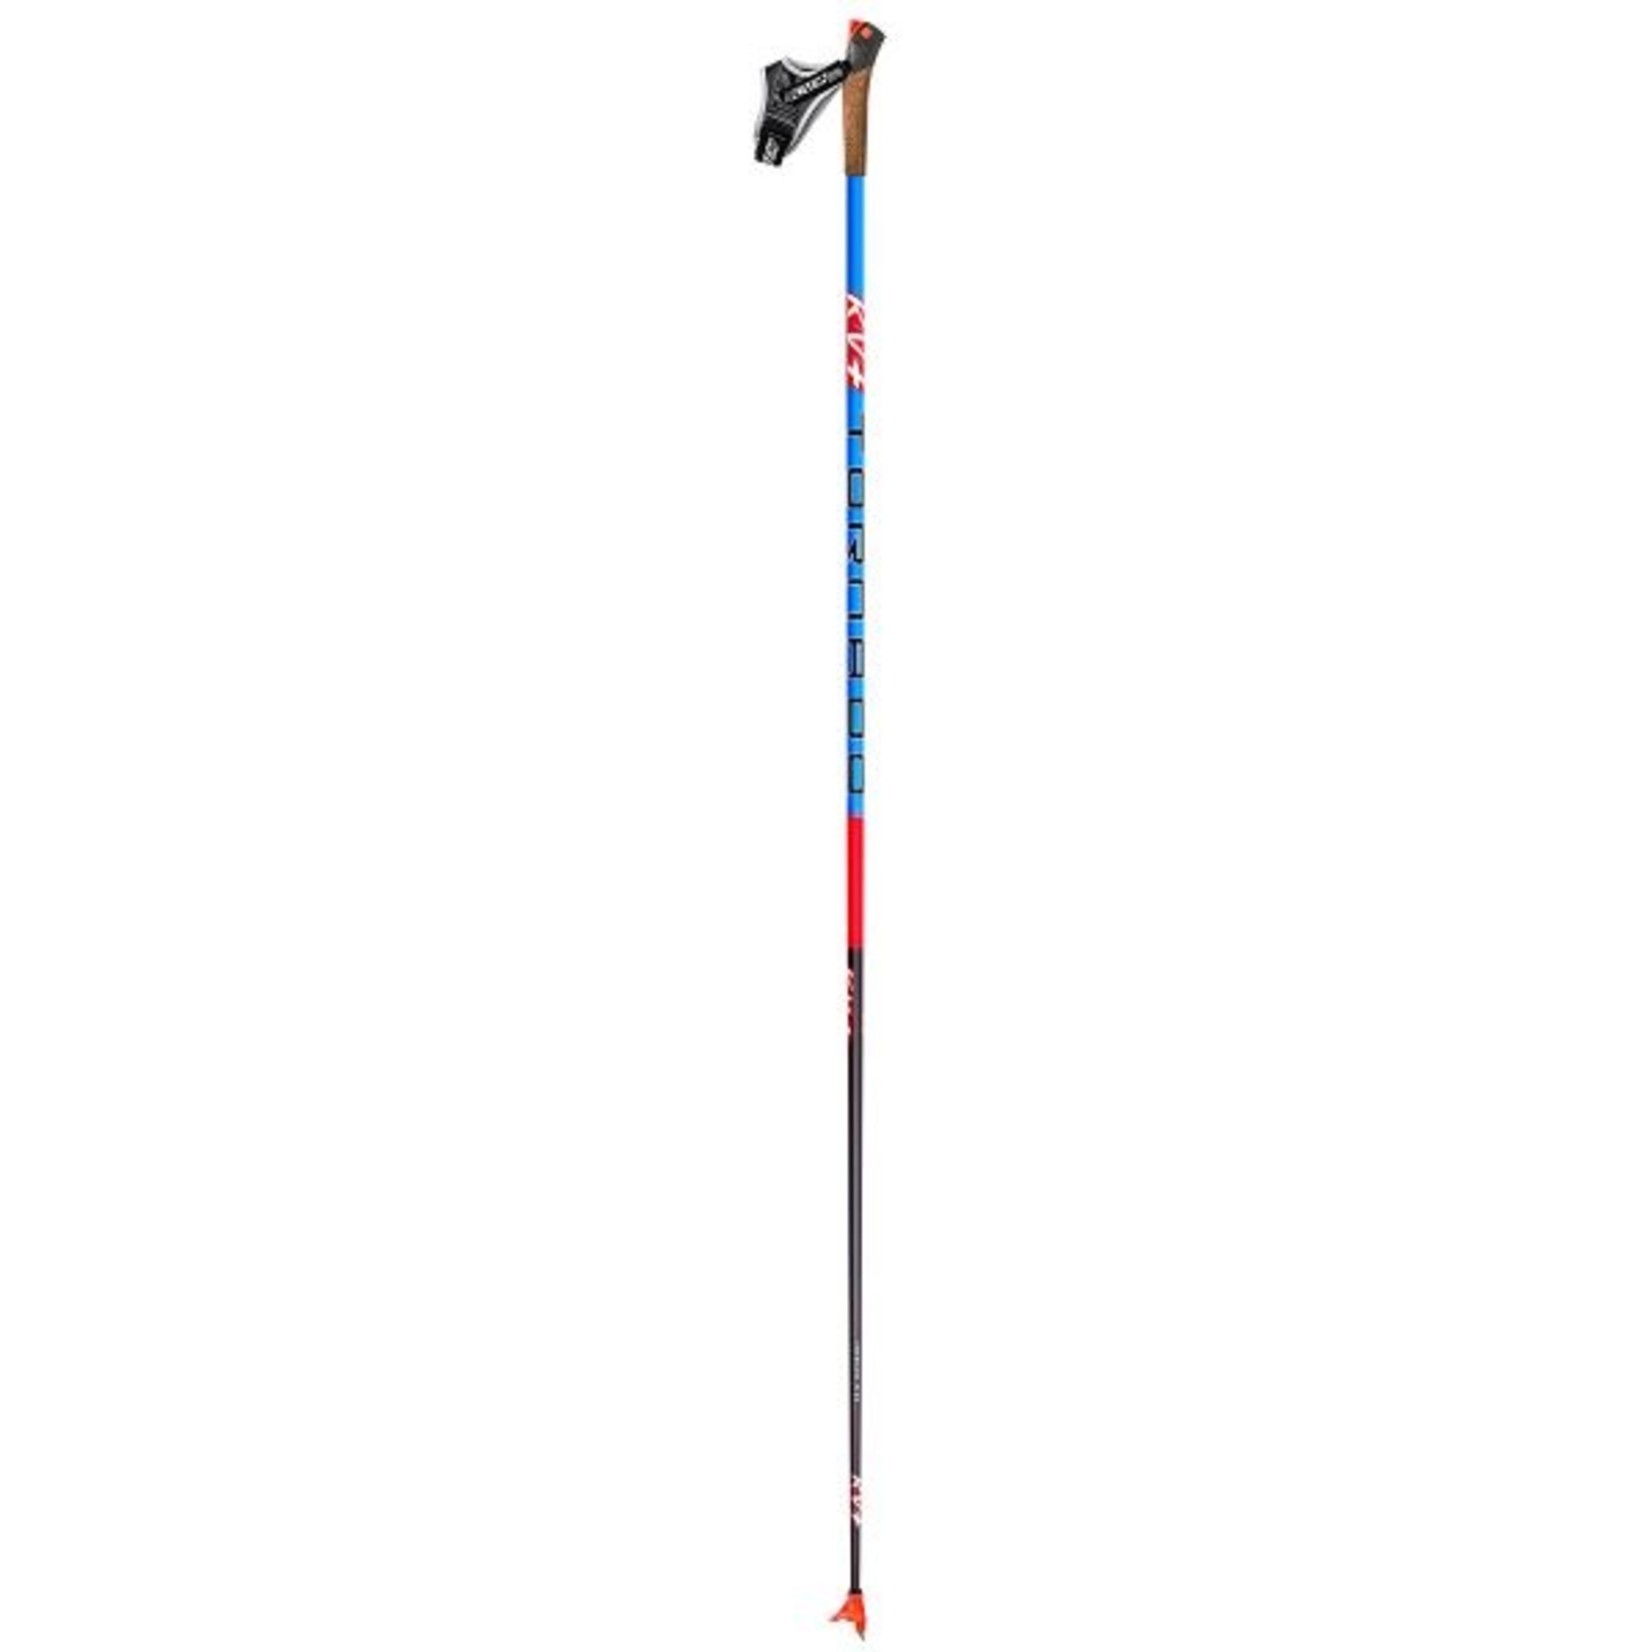 KV+ KV+, TORNADO Blue ski pole, Falcon grip handles